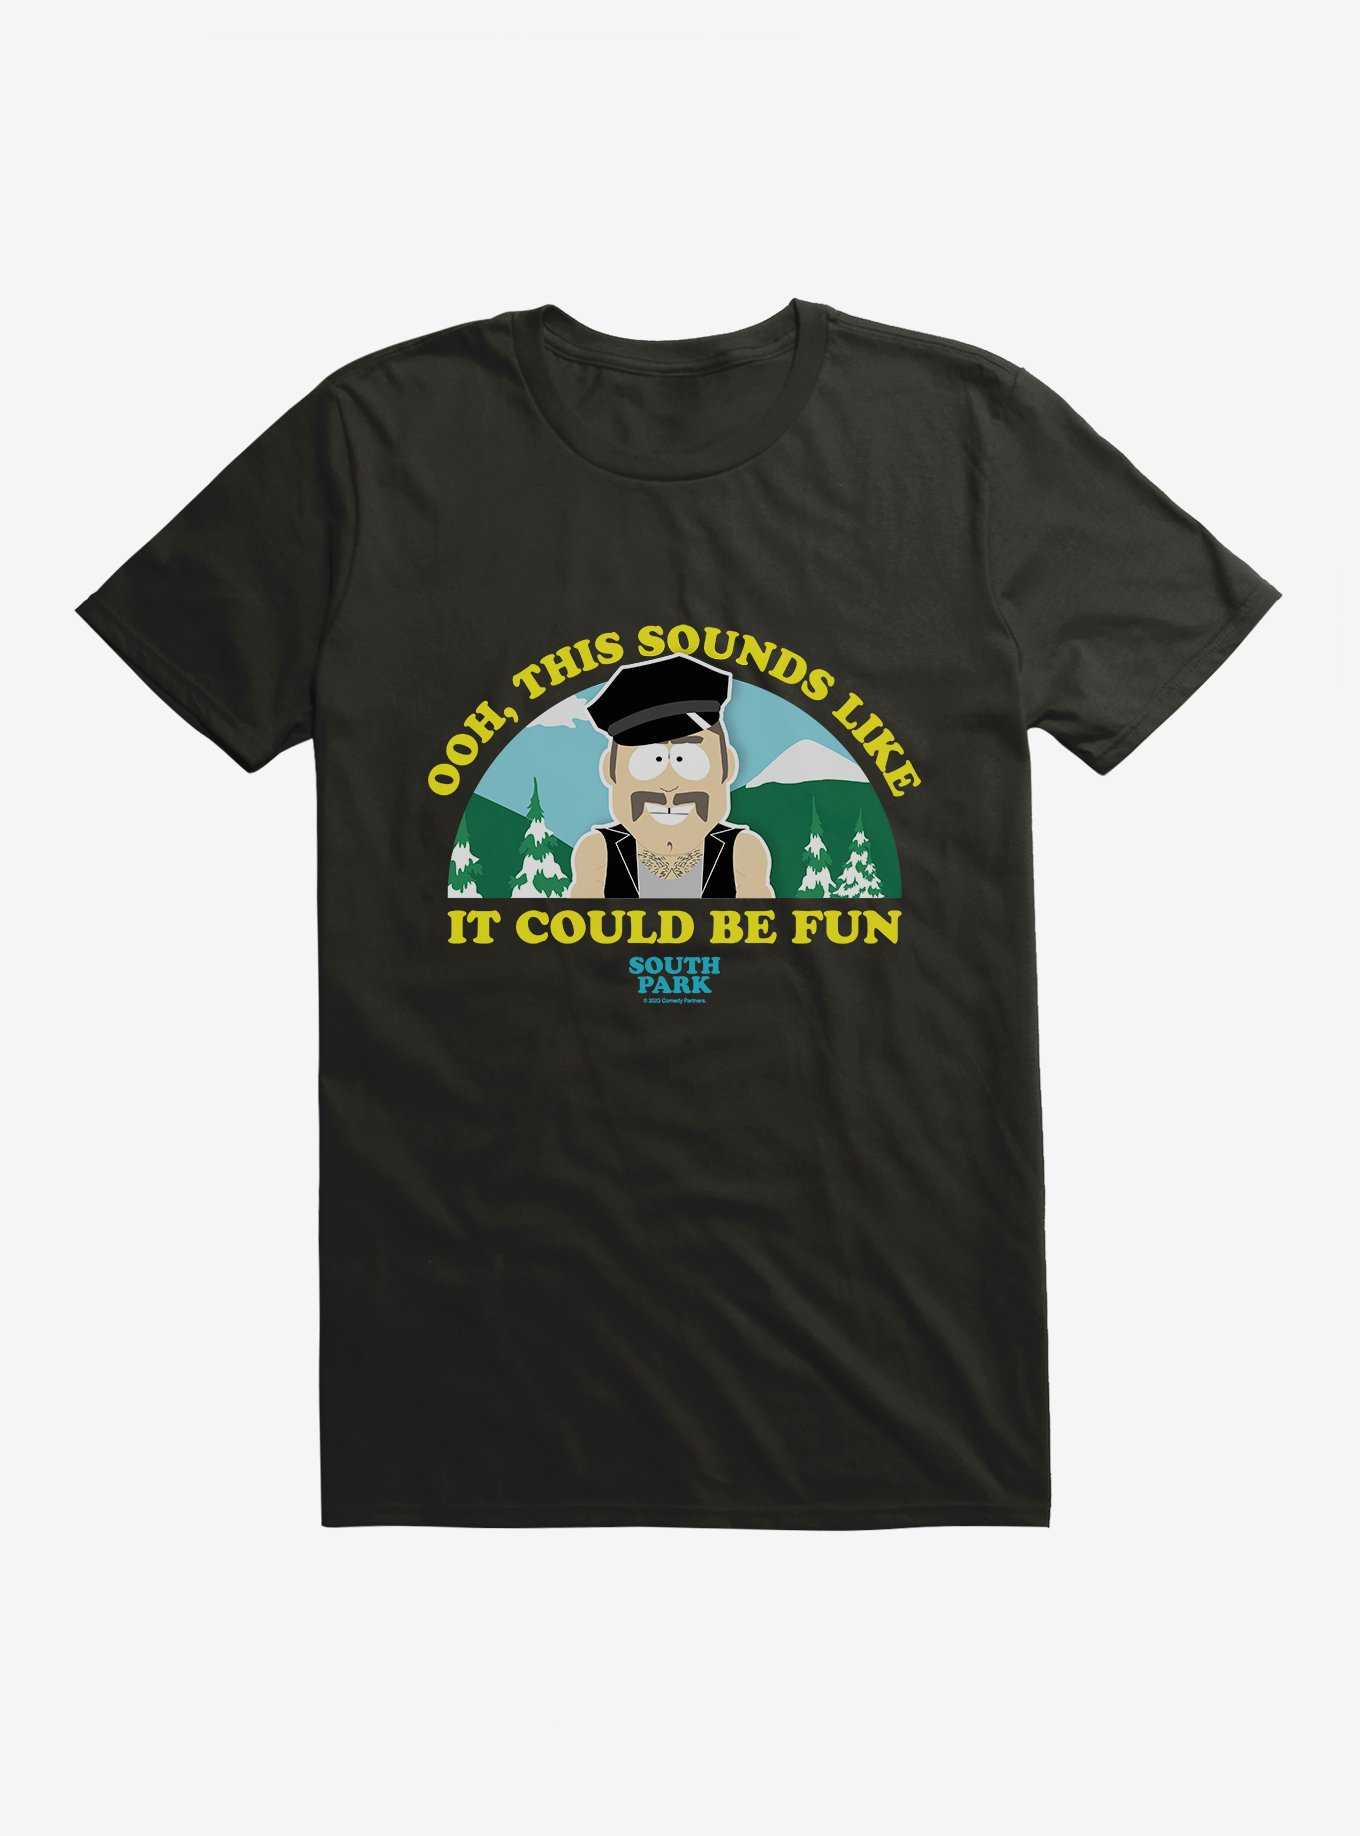 South Park Mr. Slave Could Be Fun T-Shirt, , hi-res